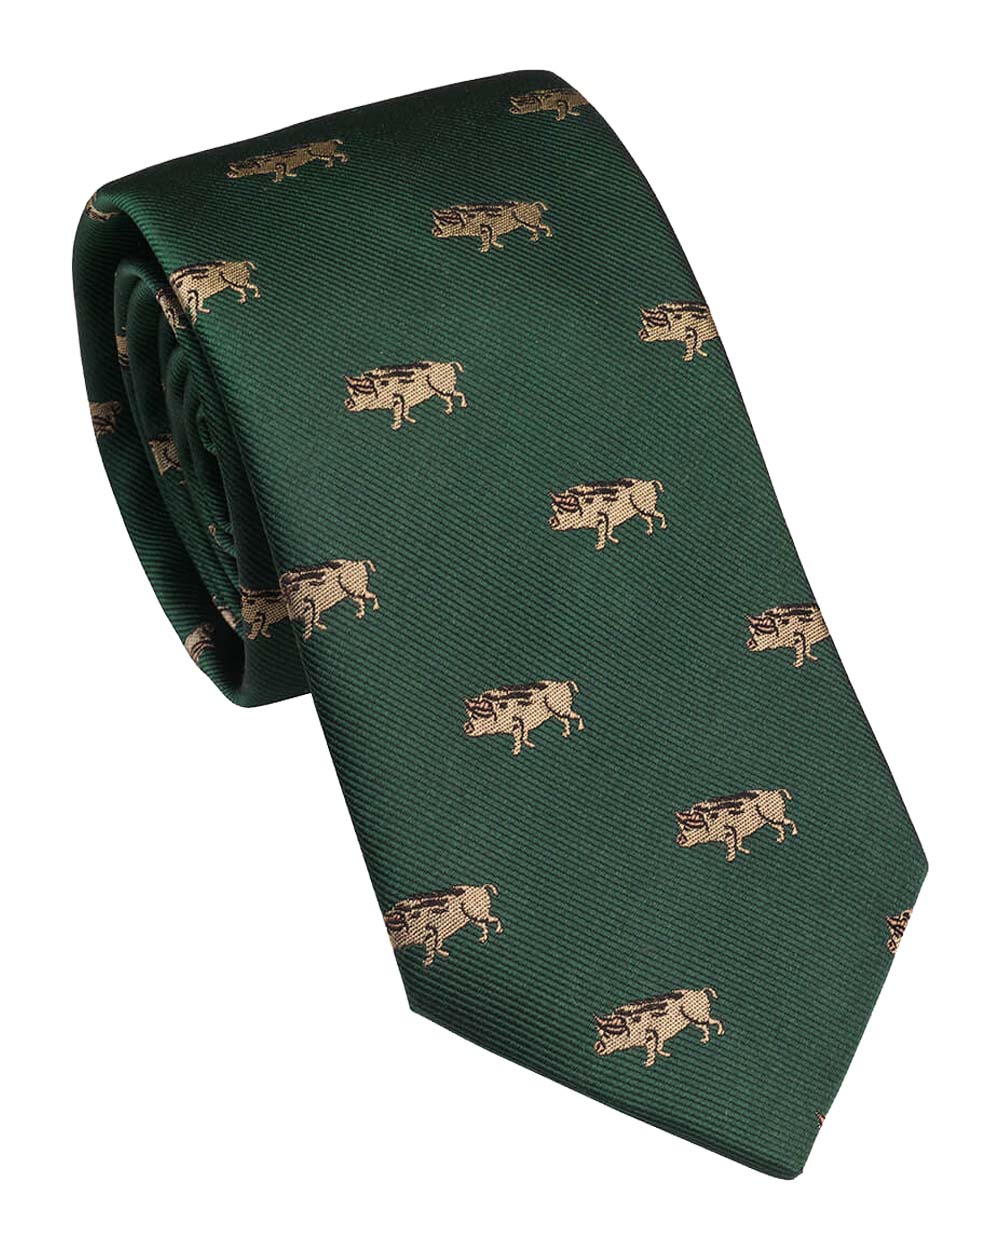 British Racing Green coloured Laksen Wild Boar Tie on White background 